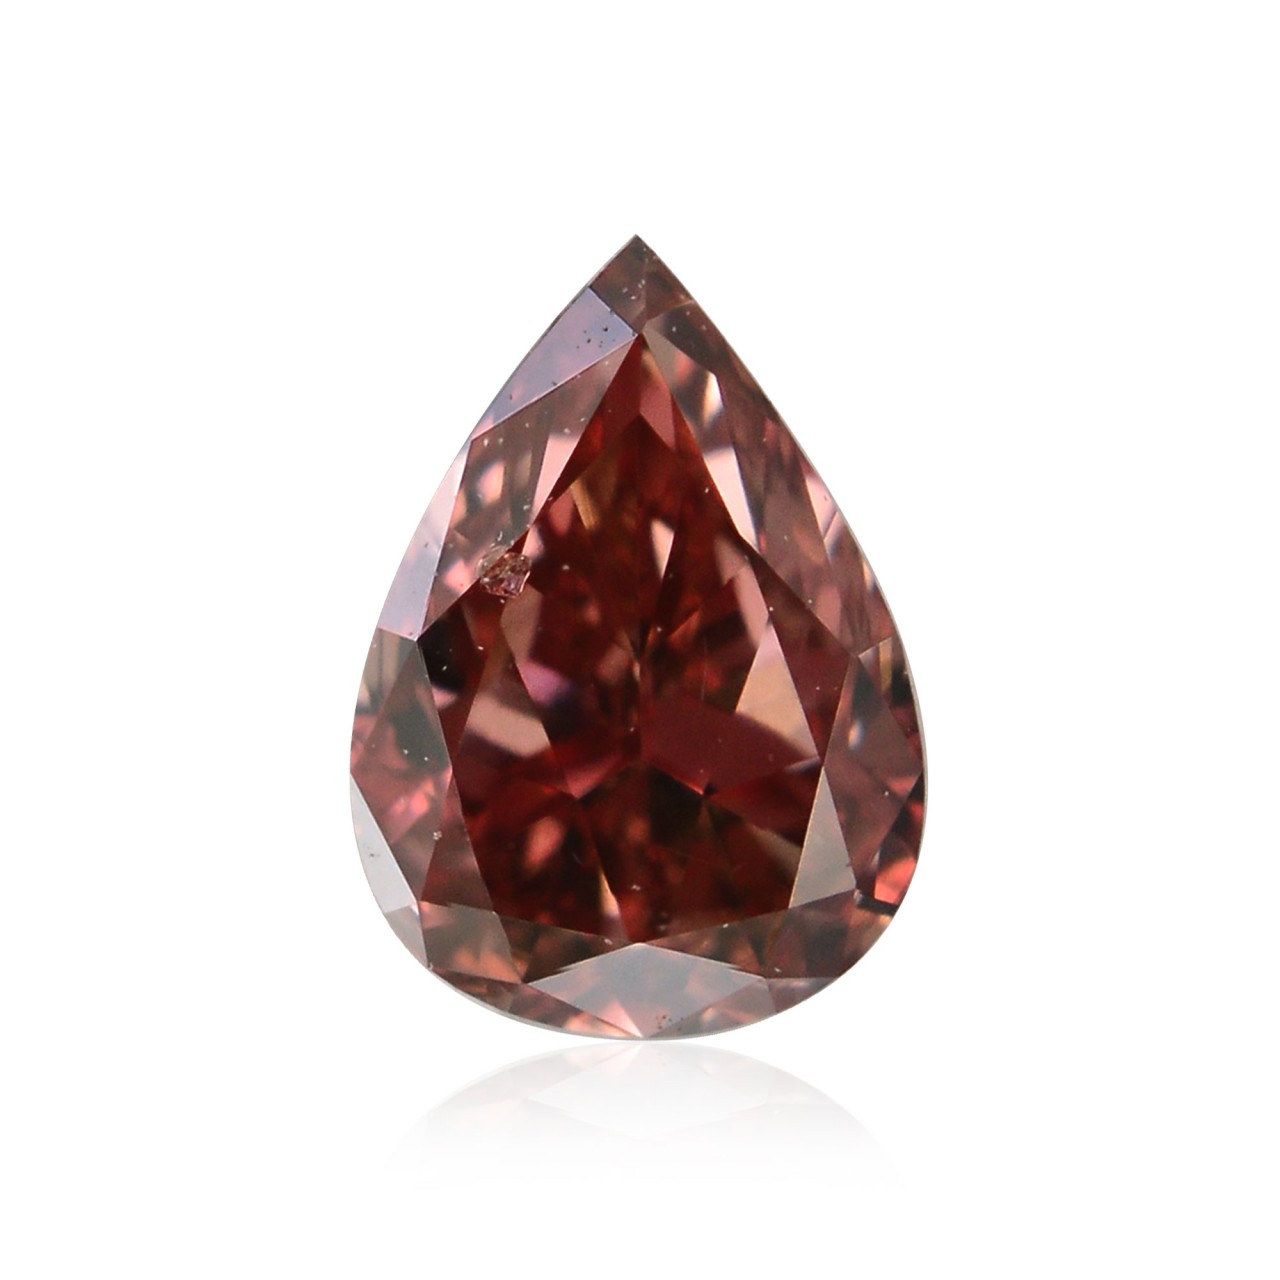 0.17 carat, Fancy Red Diamond, Pear Shape, SI2 Clarity, GIA, SKU 68135